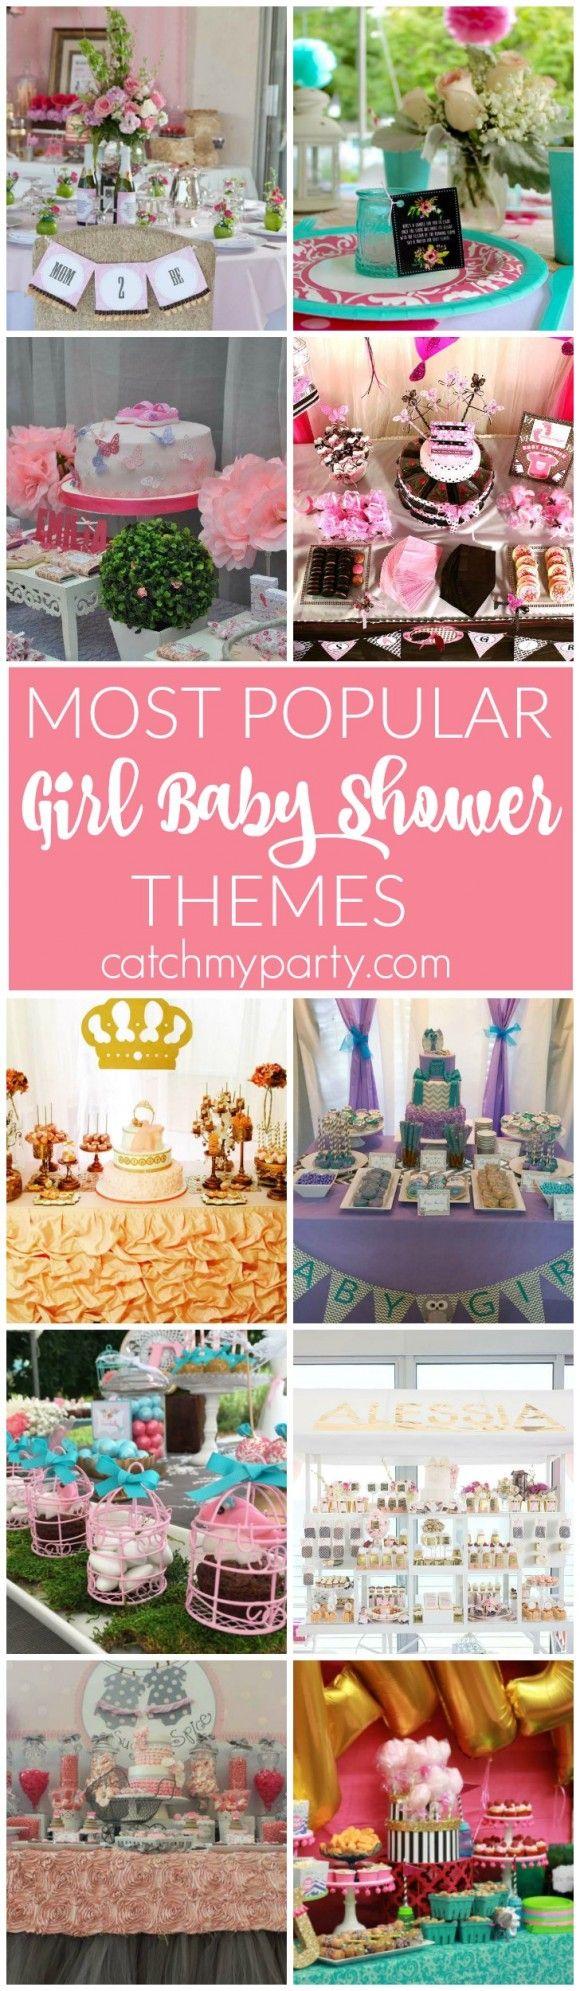 Wedding - Most Popular Girl Baby Shower Themes